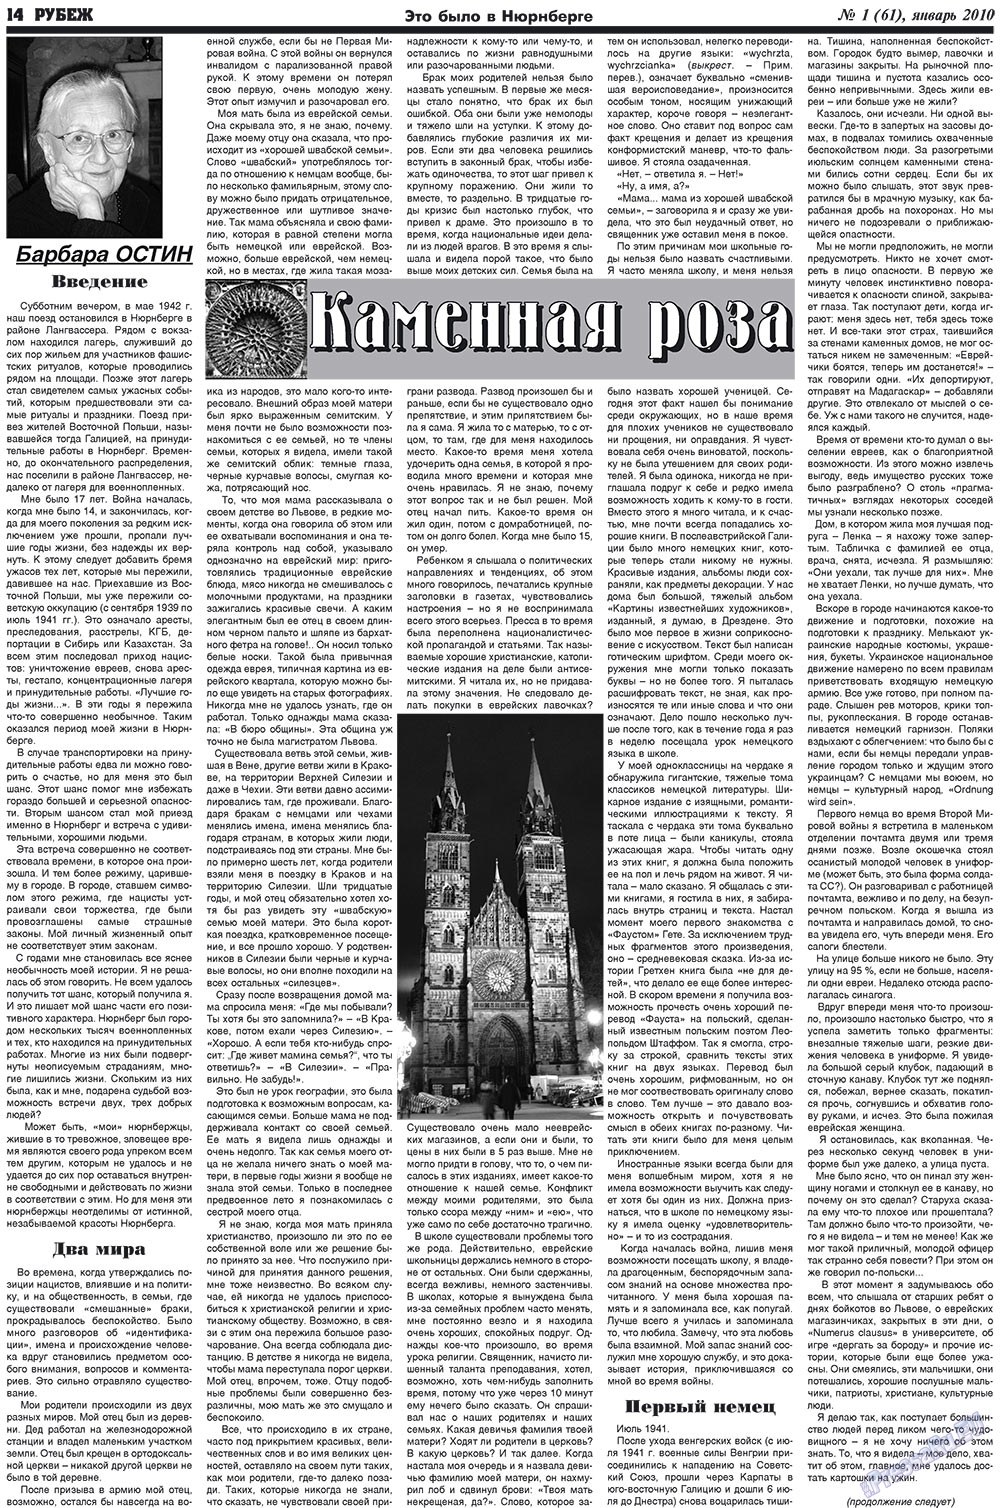 Рубеж, газета. 2010 №1 стр.14